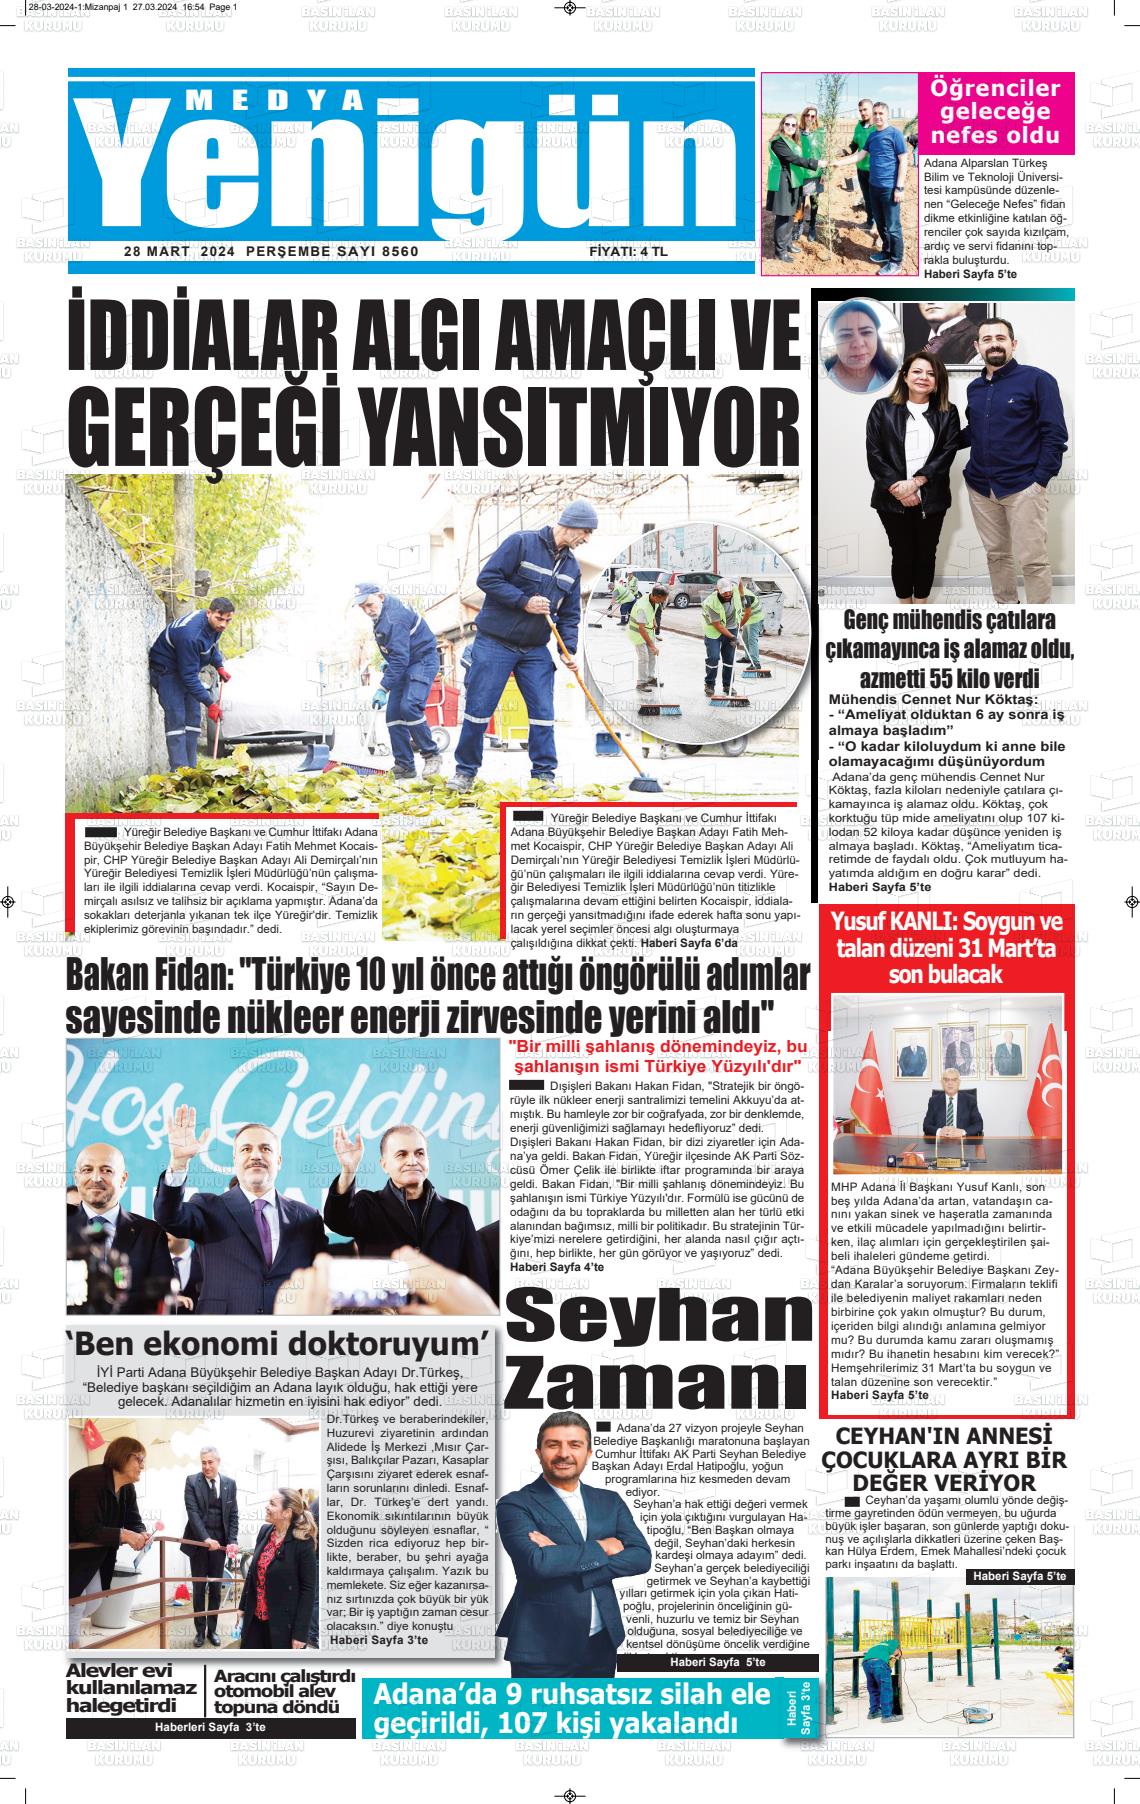 28 Mart 2024 Medya Yenigün Gazete Manşeti